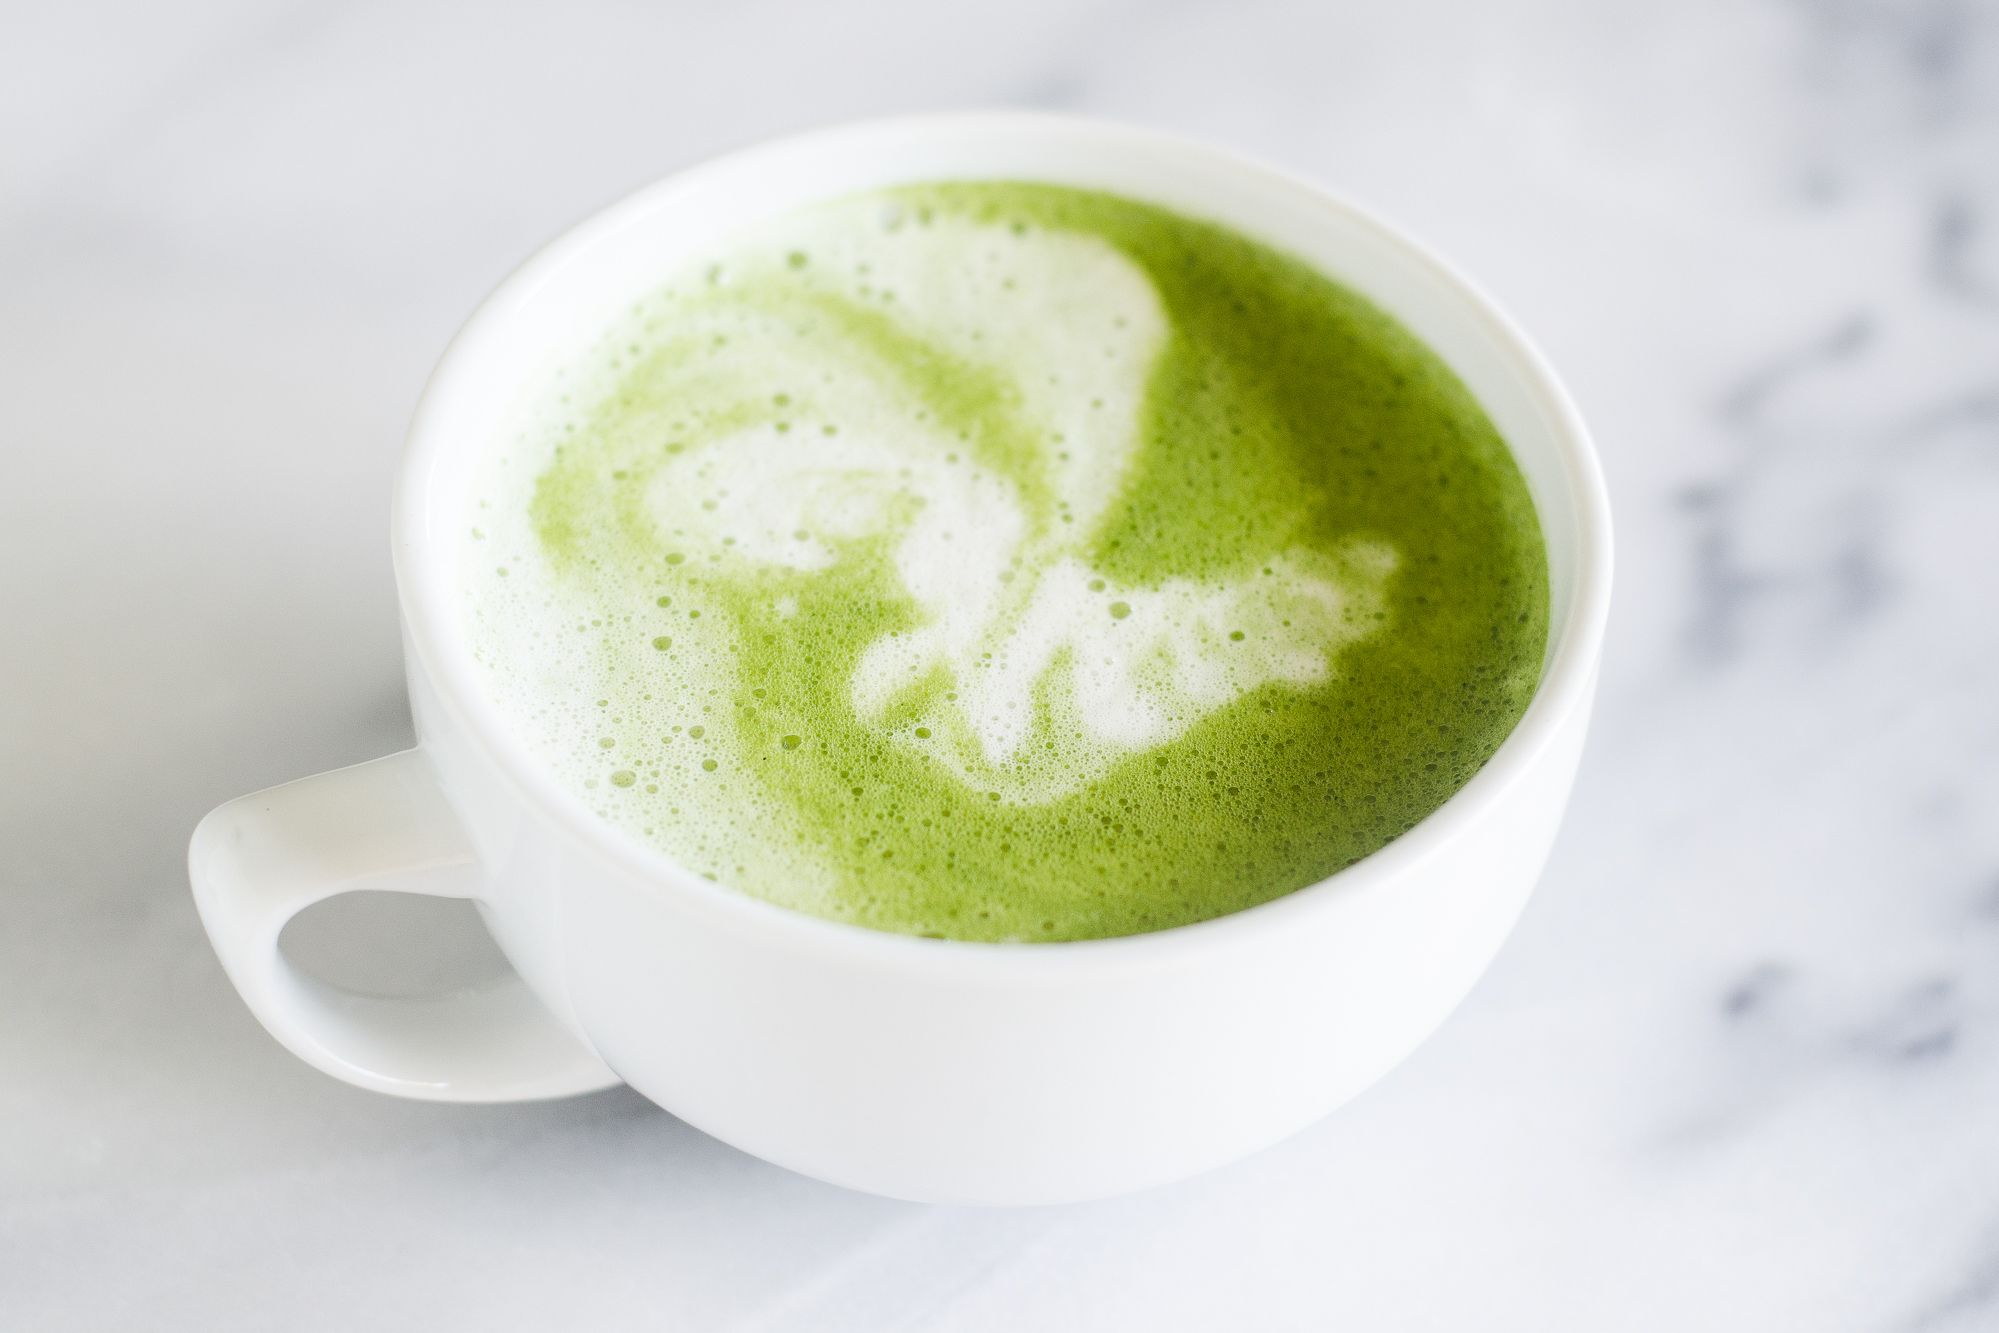 https://hips.hearstapps.com/thepioneerwoman/wp-content/uploads/2016/11/how-to-make-a-matcha-latte-01.jpg